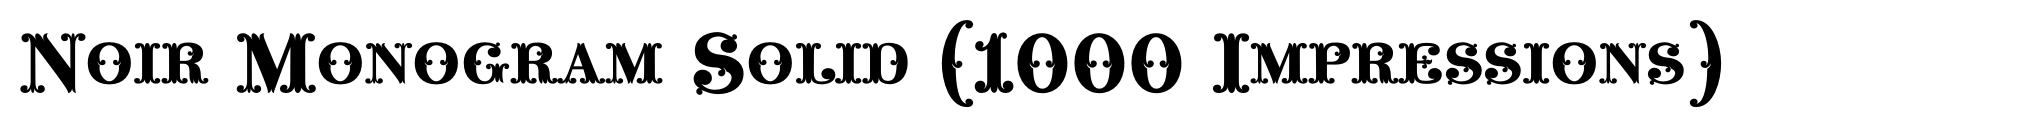 Noir Monogram Solid (1000 Impressions) image